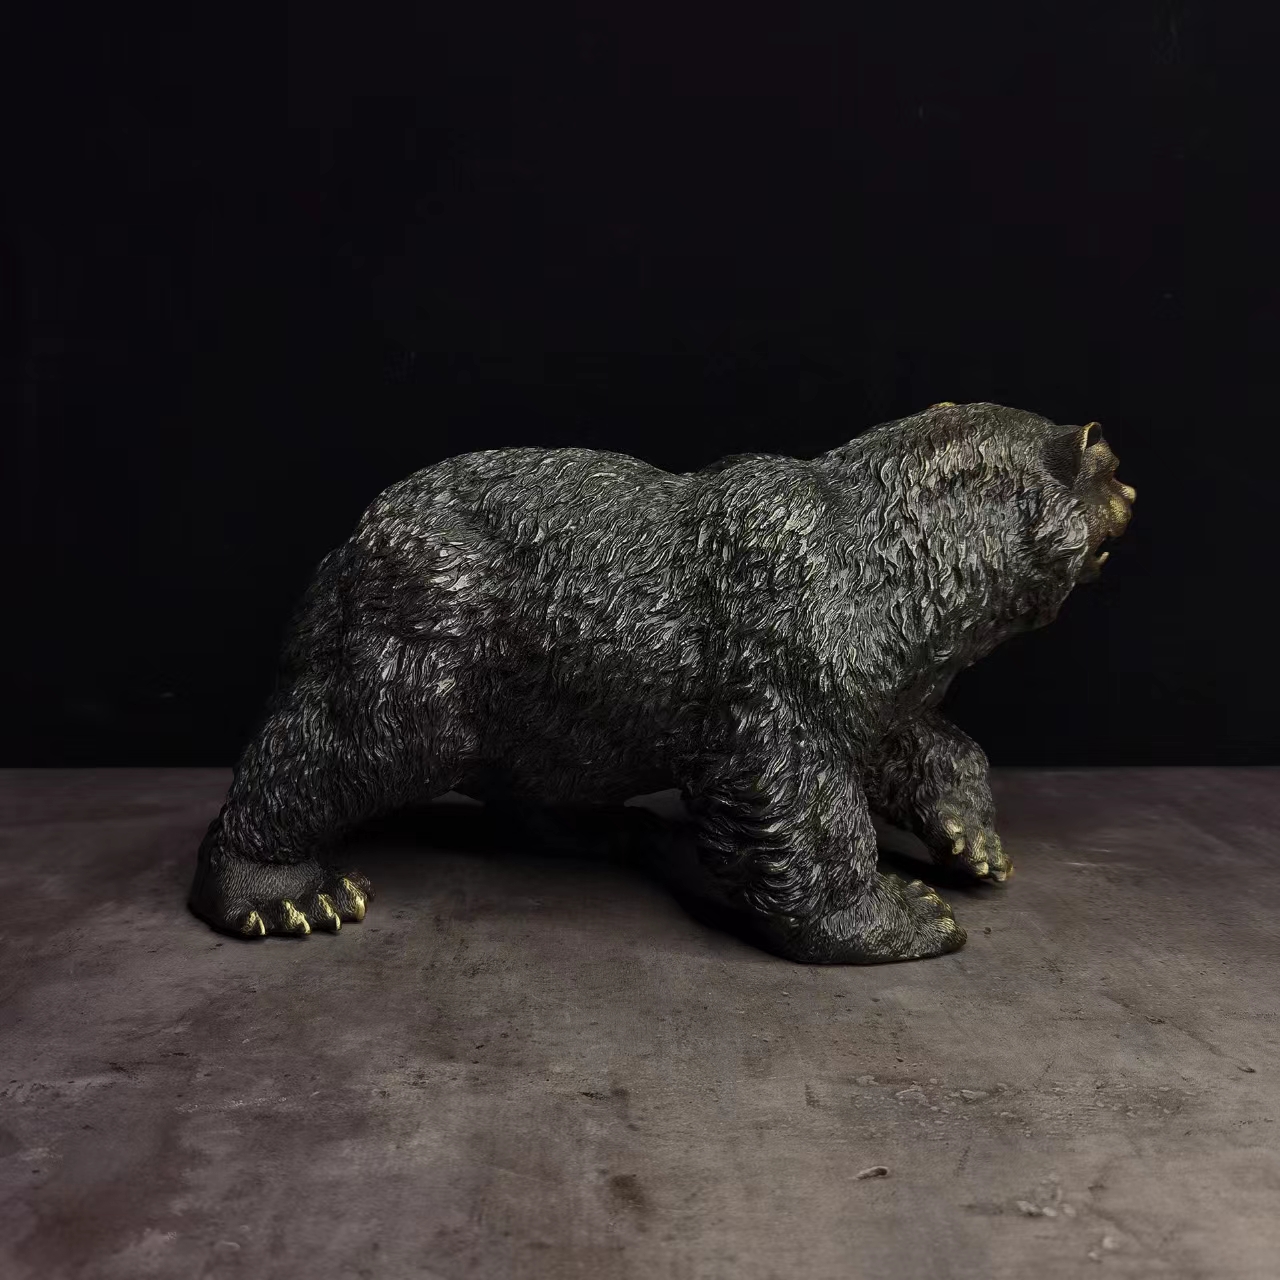 Brown bear statue